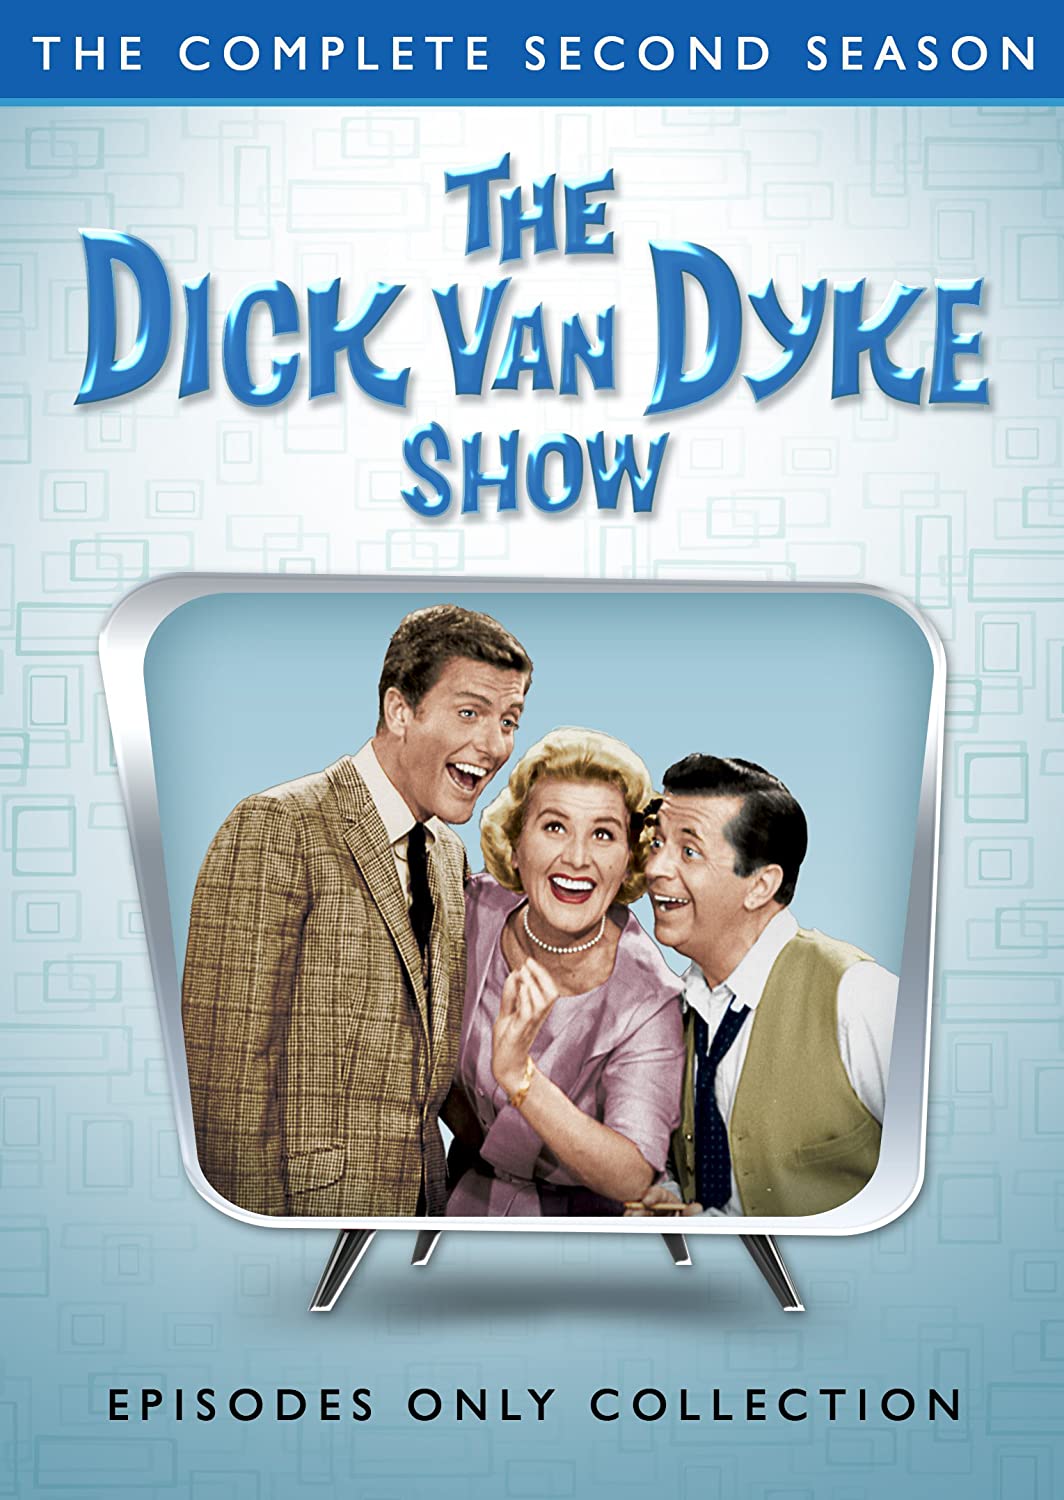 The Dick Van Dyke Show season 2 episode guide